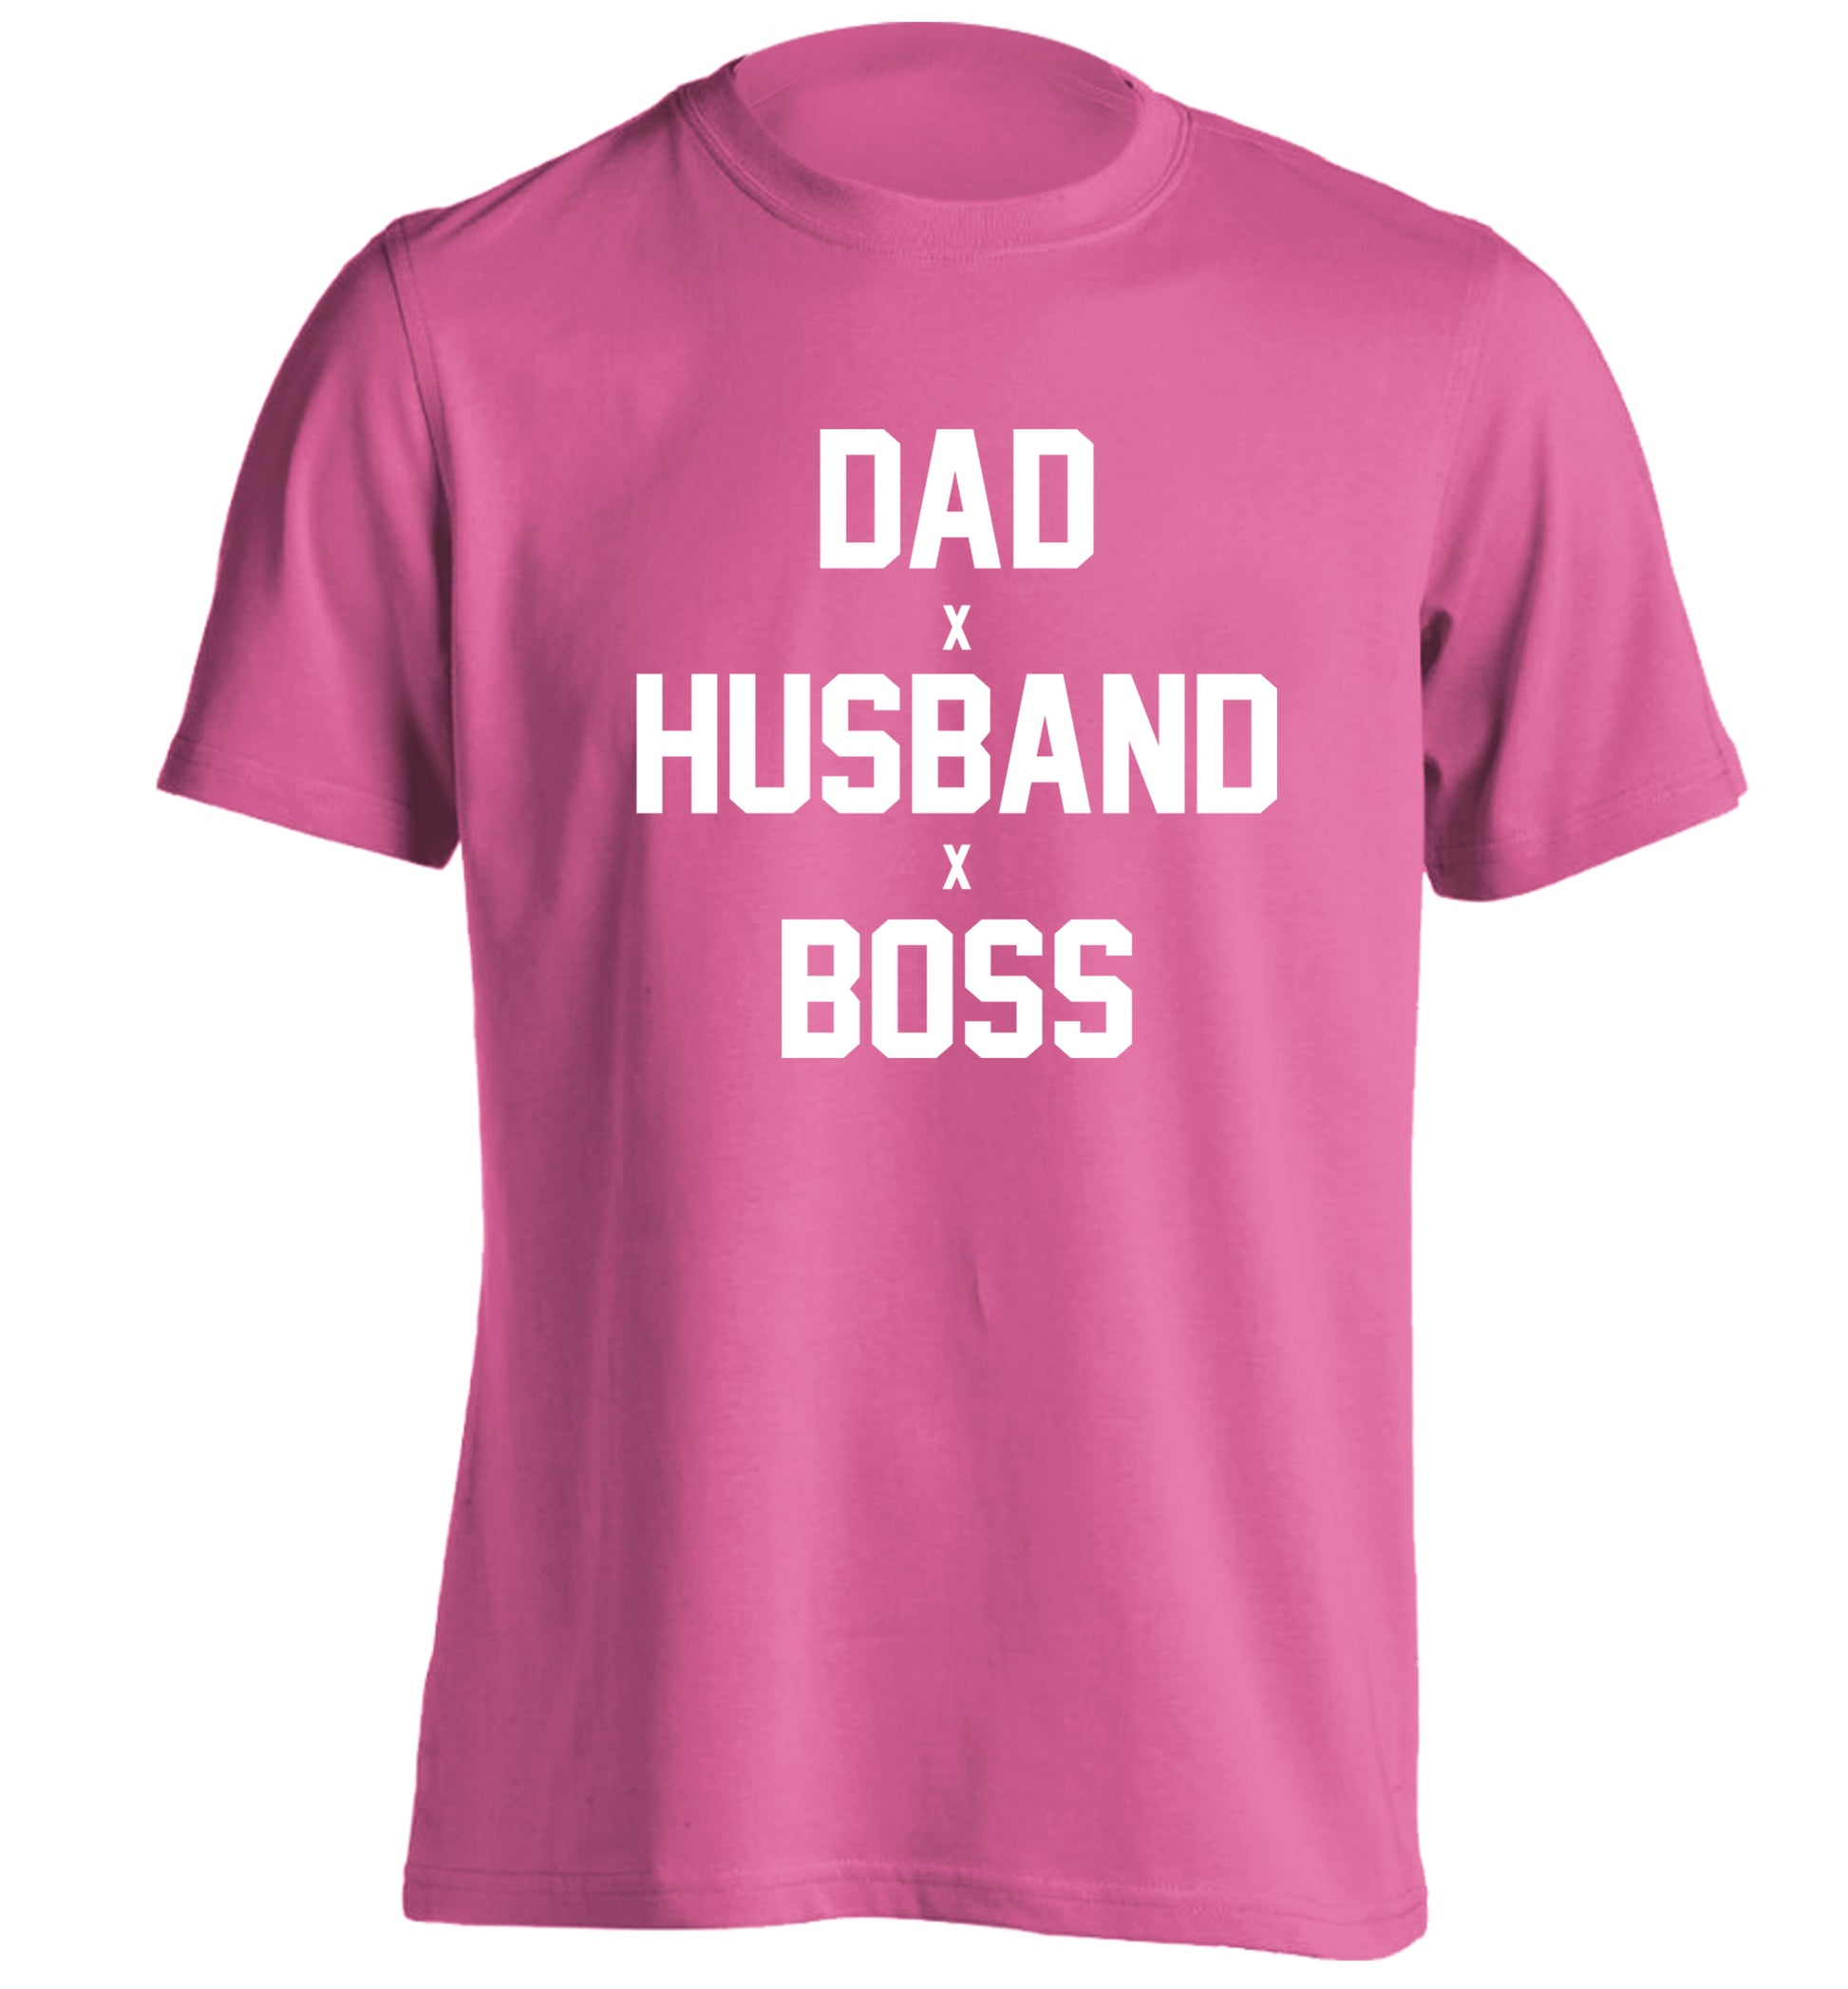 Dad husband boss adults unisex pink Tshirt 2XL